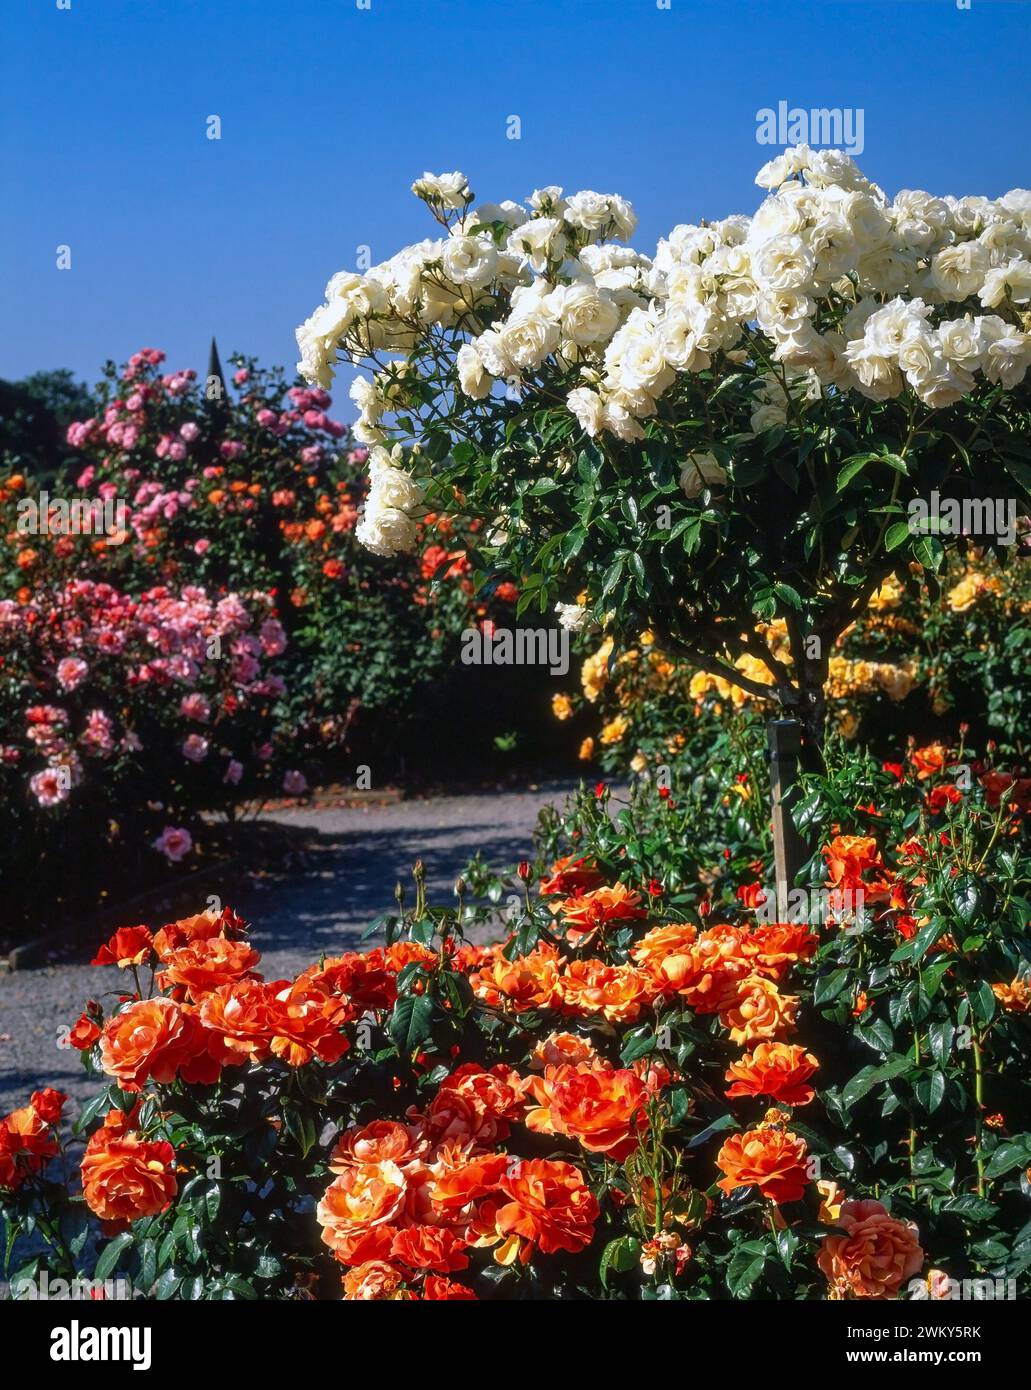 Spektakulärer farbenfroher Rosengarten in Rosemoor im Jahr 1996 mit Rosa „Fellowship“, „Iceberg“ und „Michael of Kent“ Rosen in voller Blüte. Stockfoto